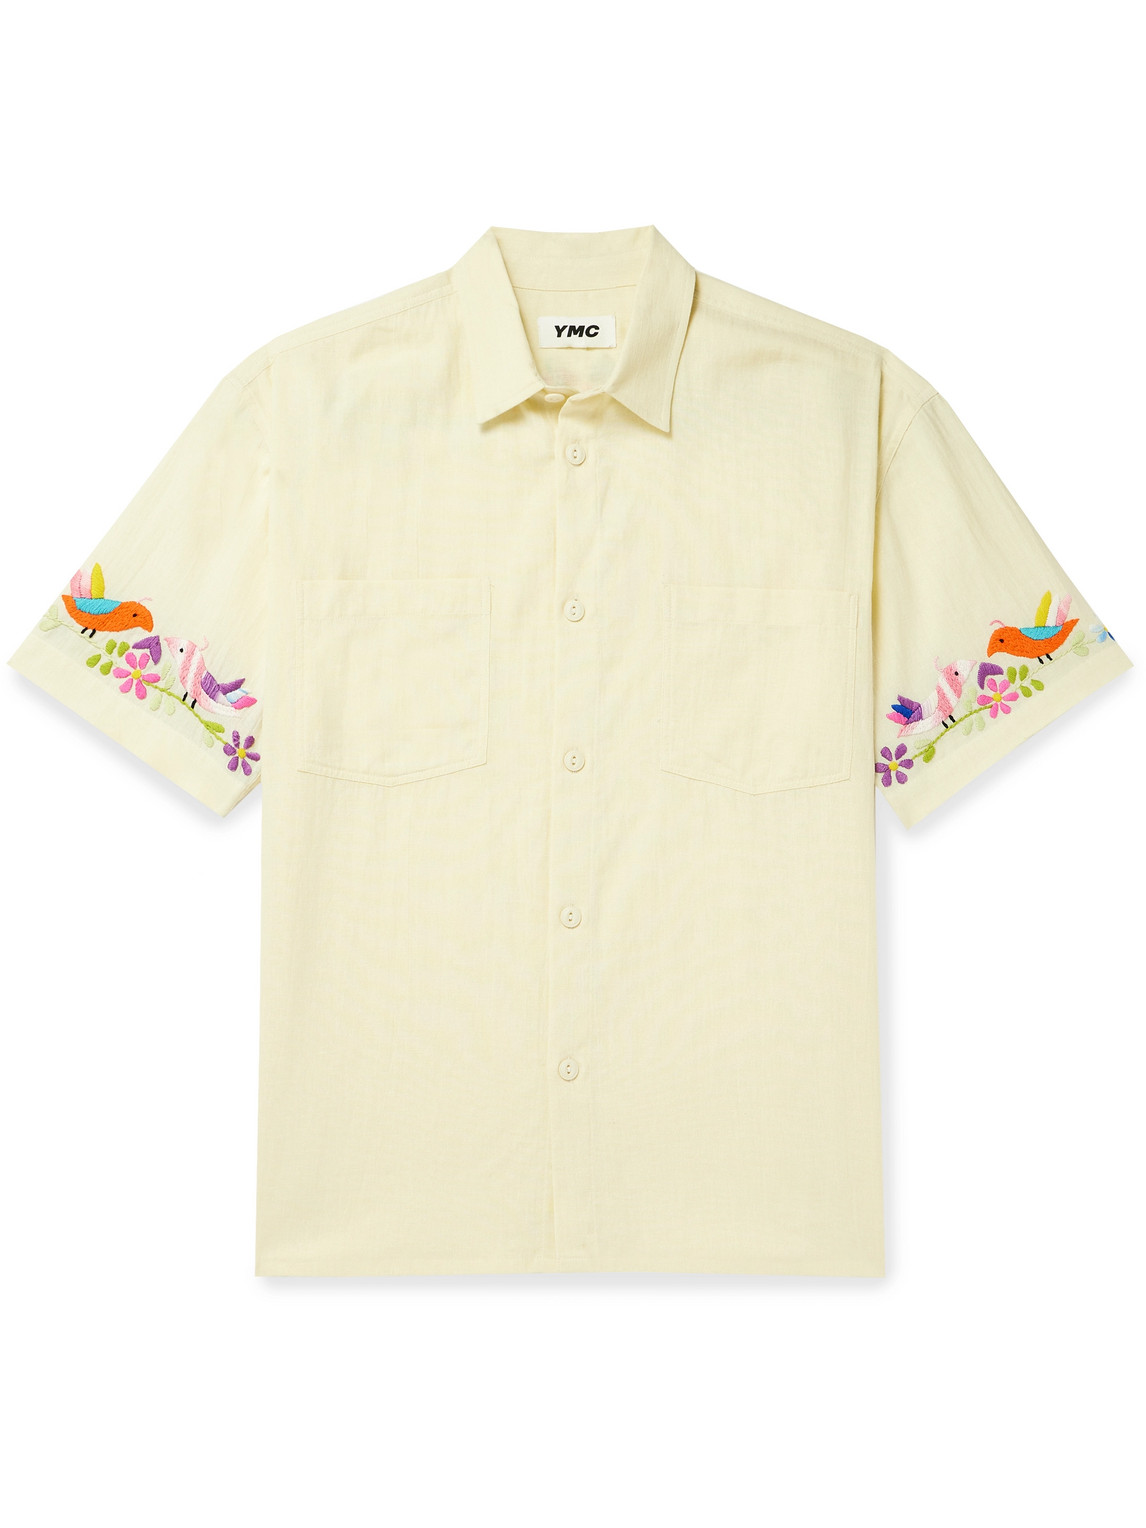 Mitchum Embroidered Cotton and Linen-Blend Shirt